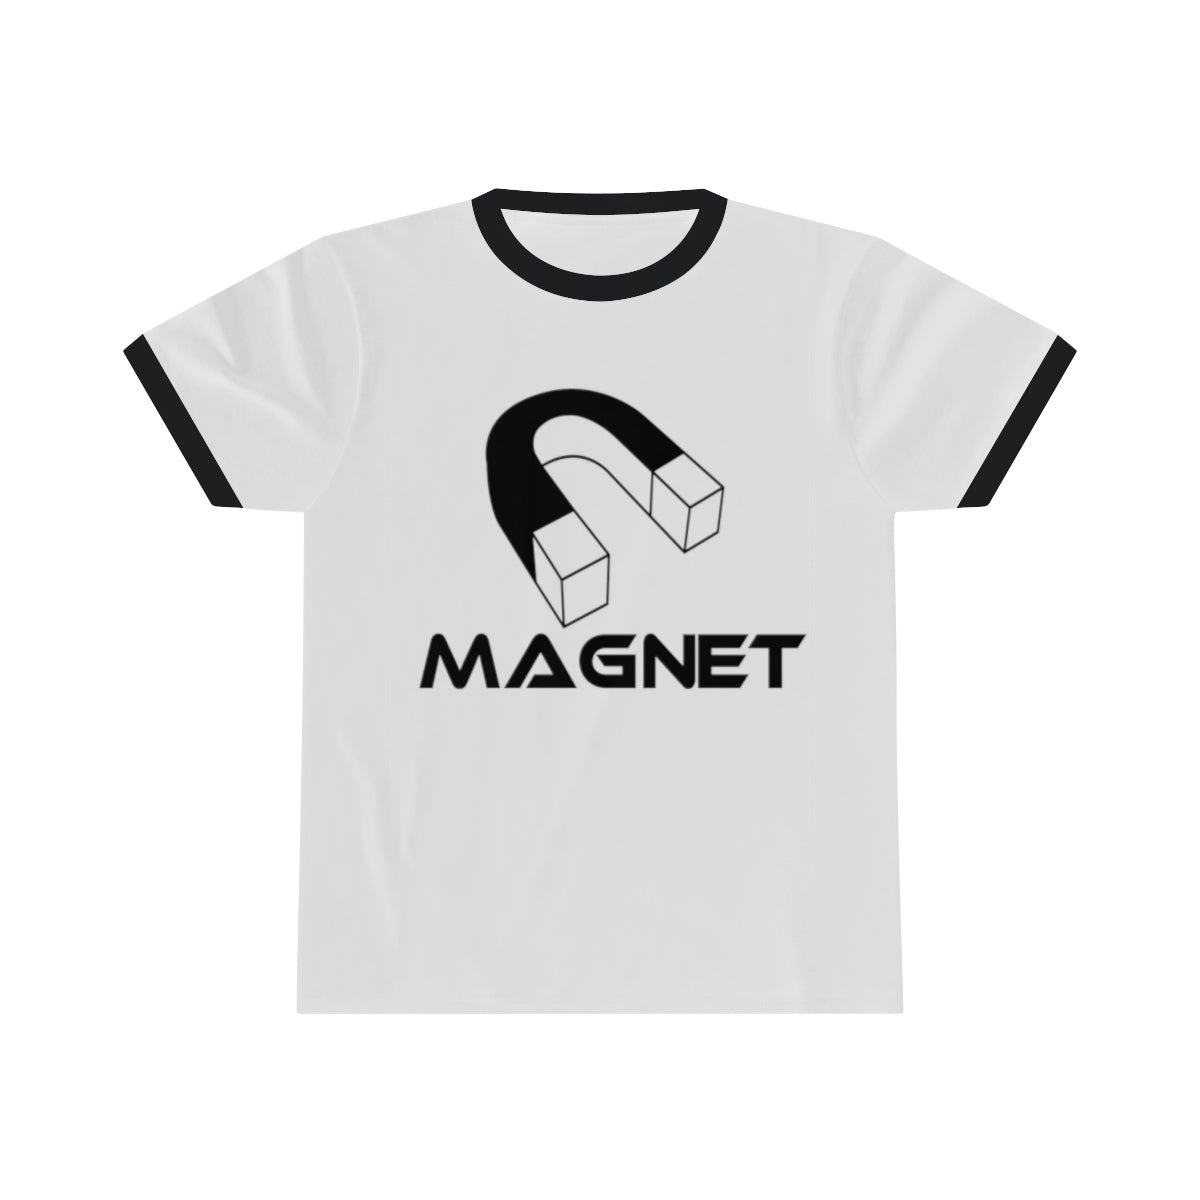 Magnet Unisex Ringer Tee xccscss.